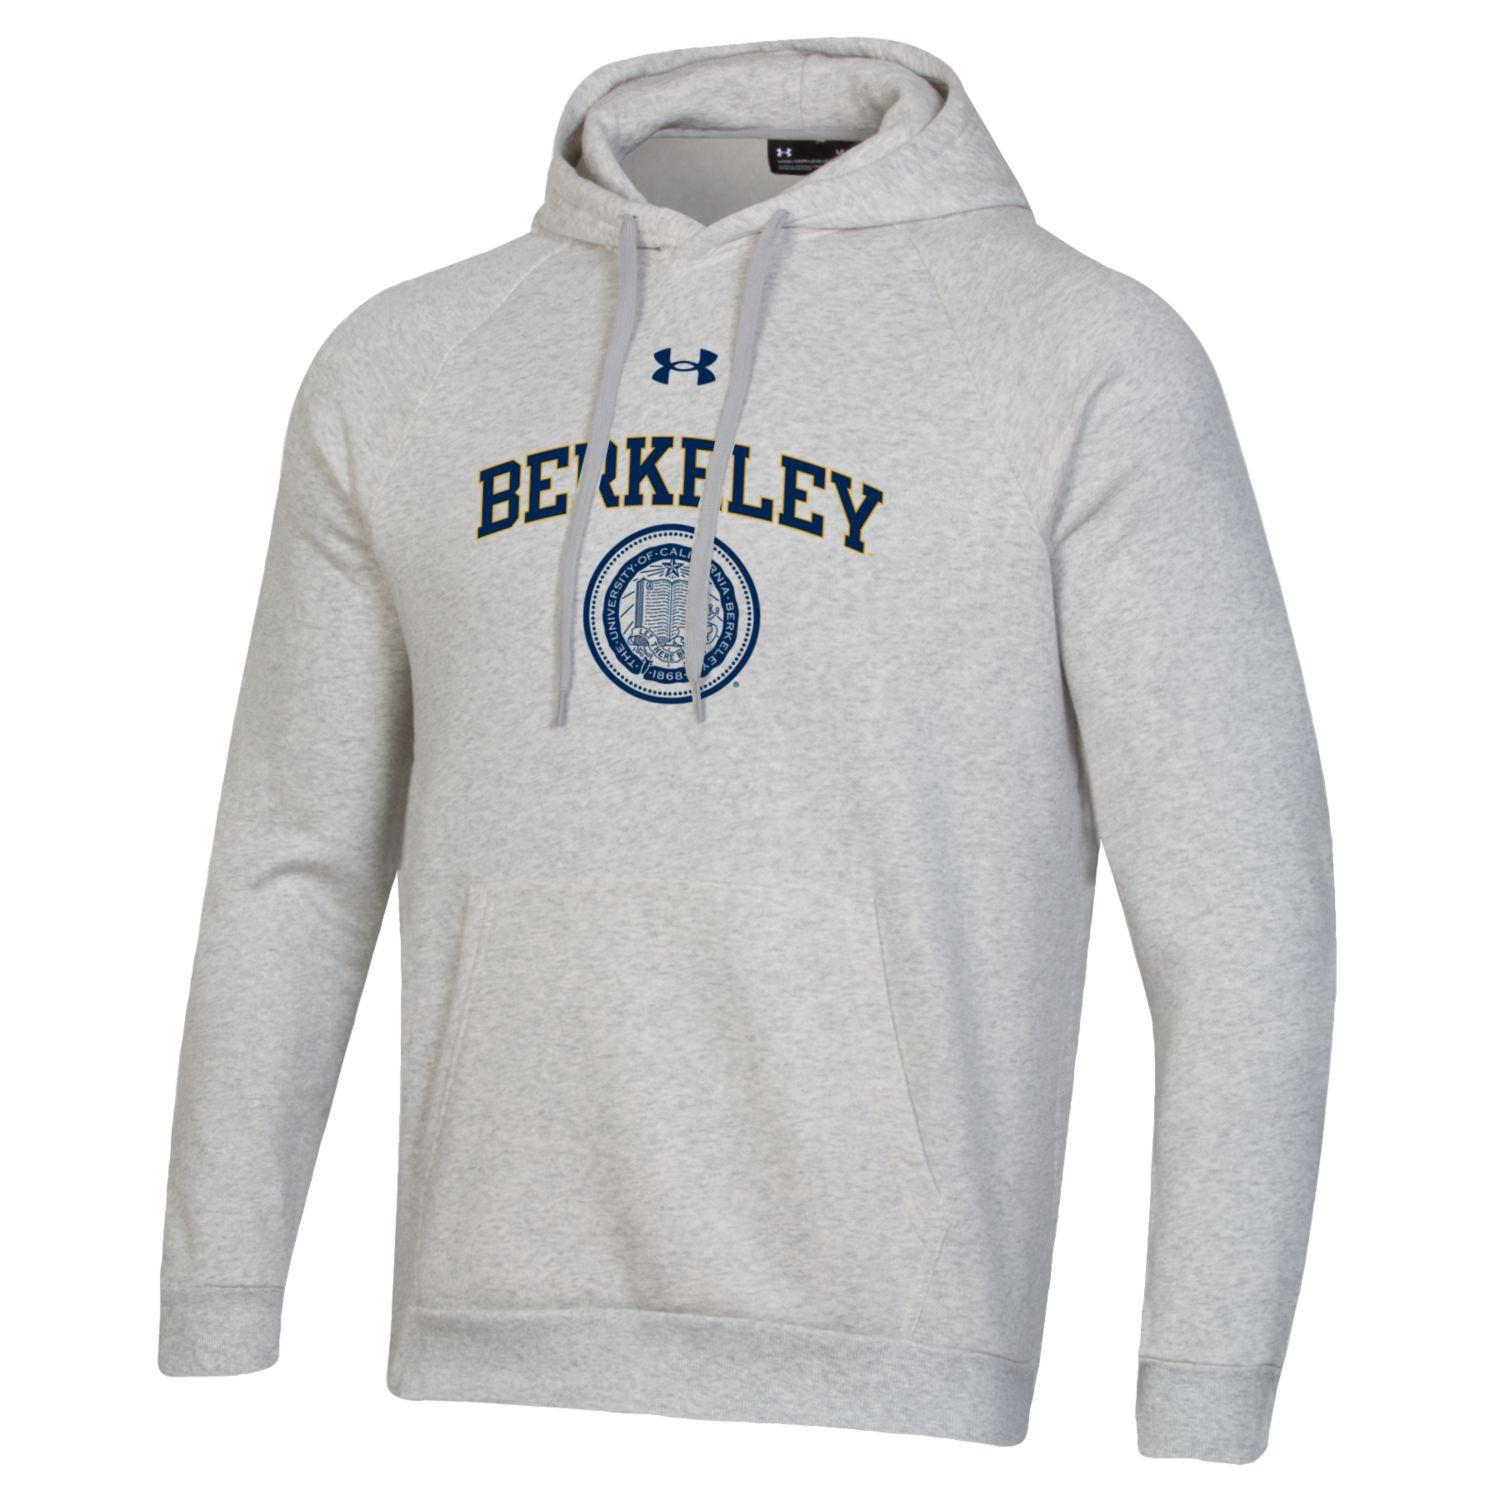 U.C. Berkeley arch & seal Under Armour all day hoodie-Silver heather-Shop College Wear